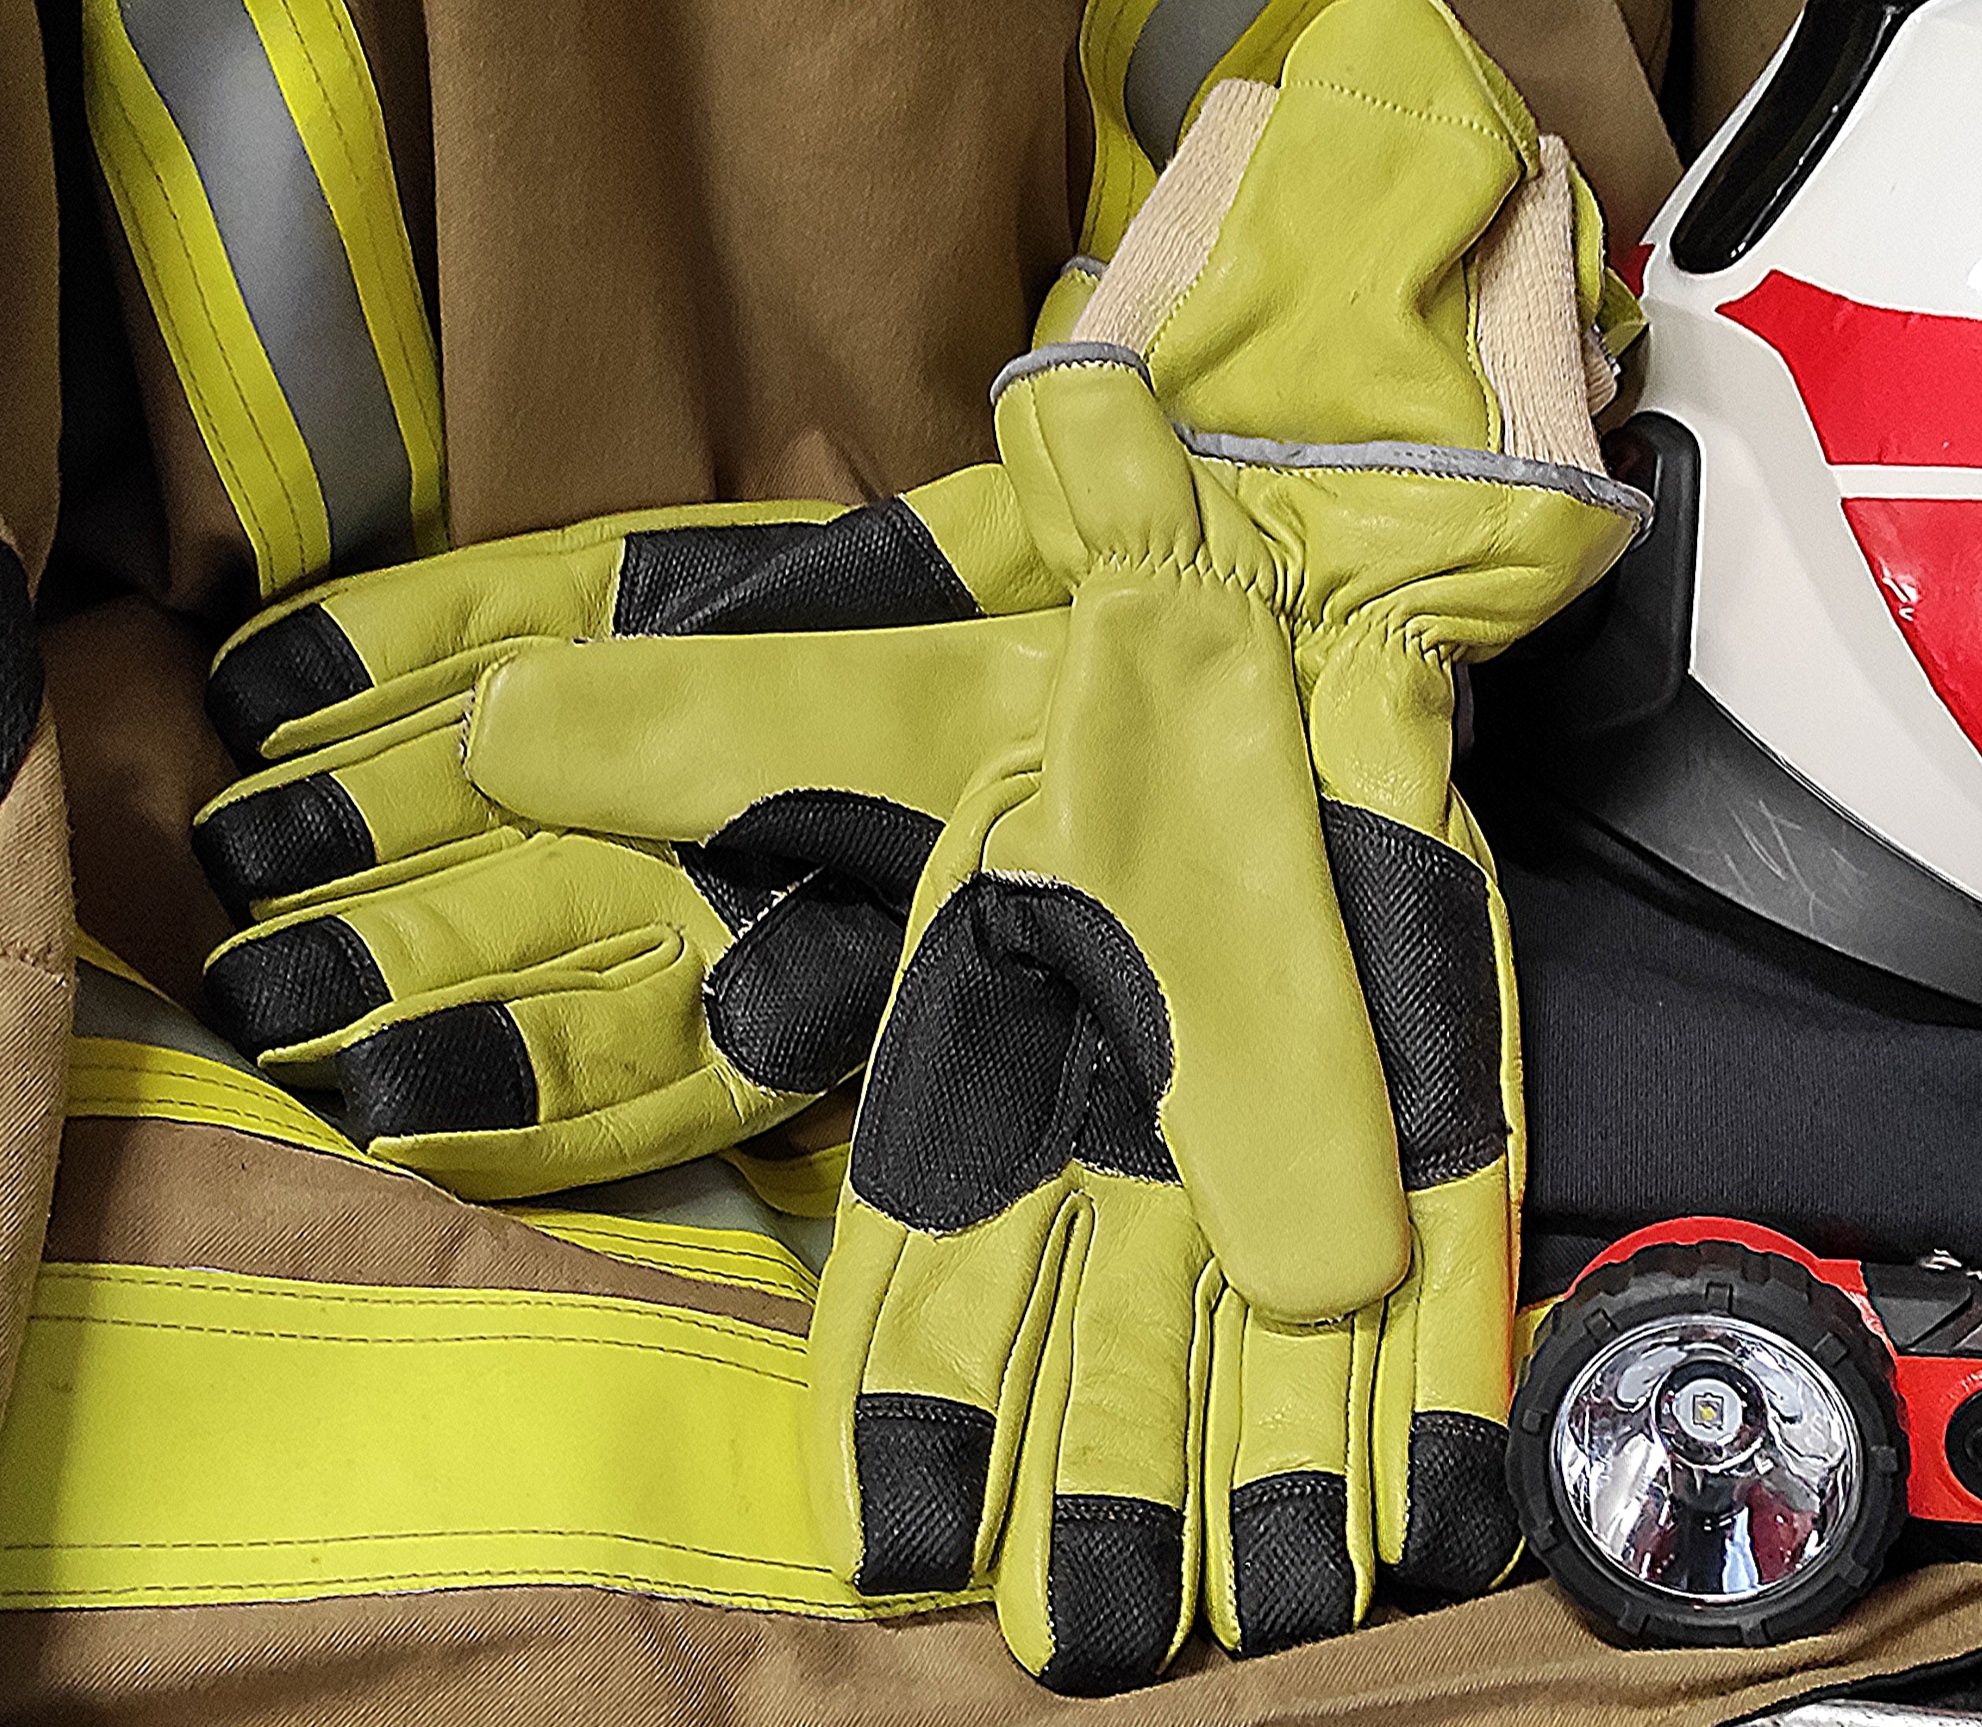 Rękawice strażackie Southcombe Firemaster (OSP,PSP,hełm,nomex,KSRG,MDP